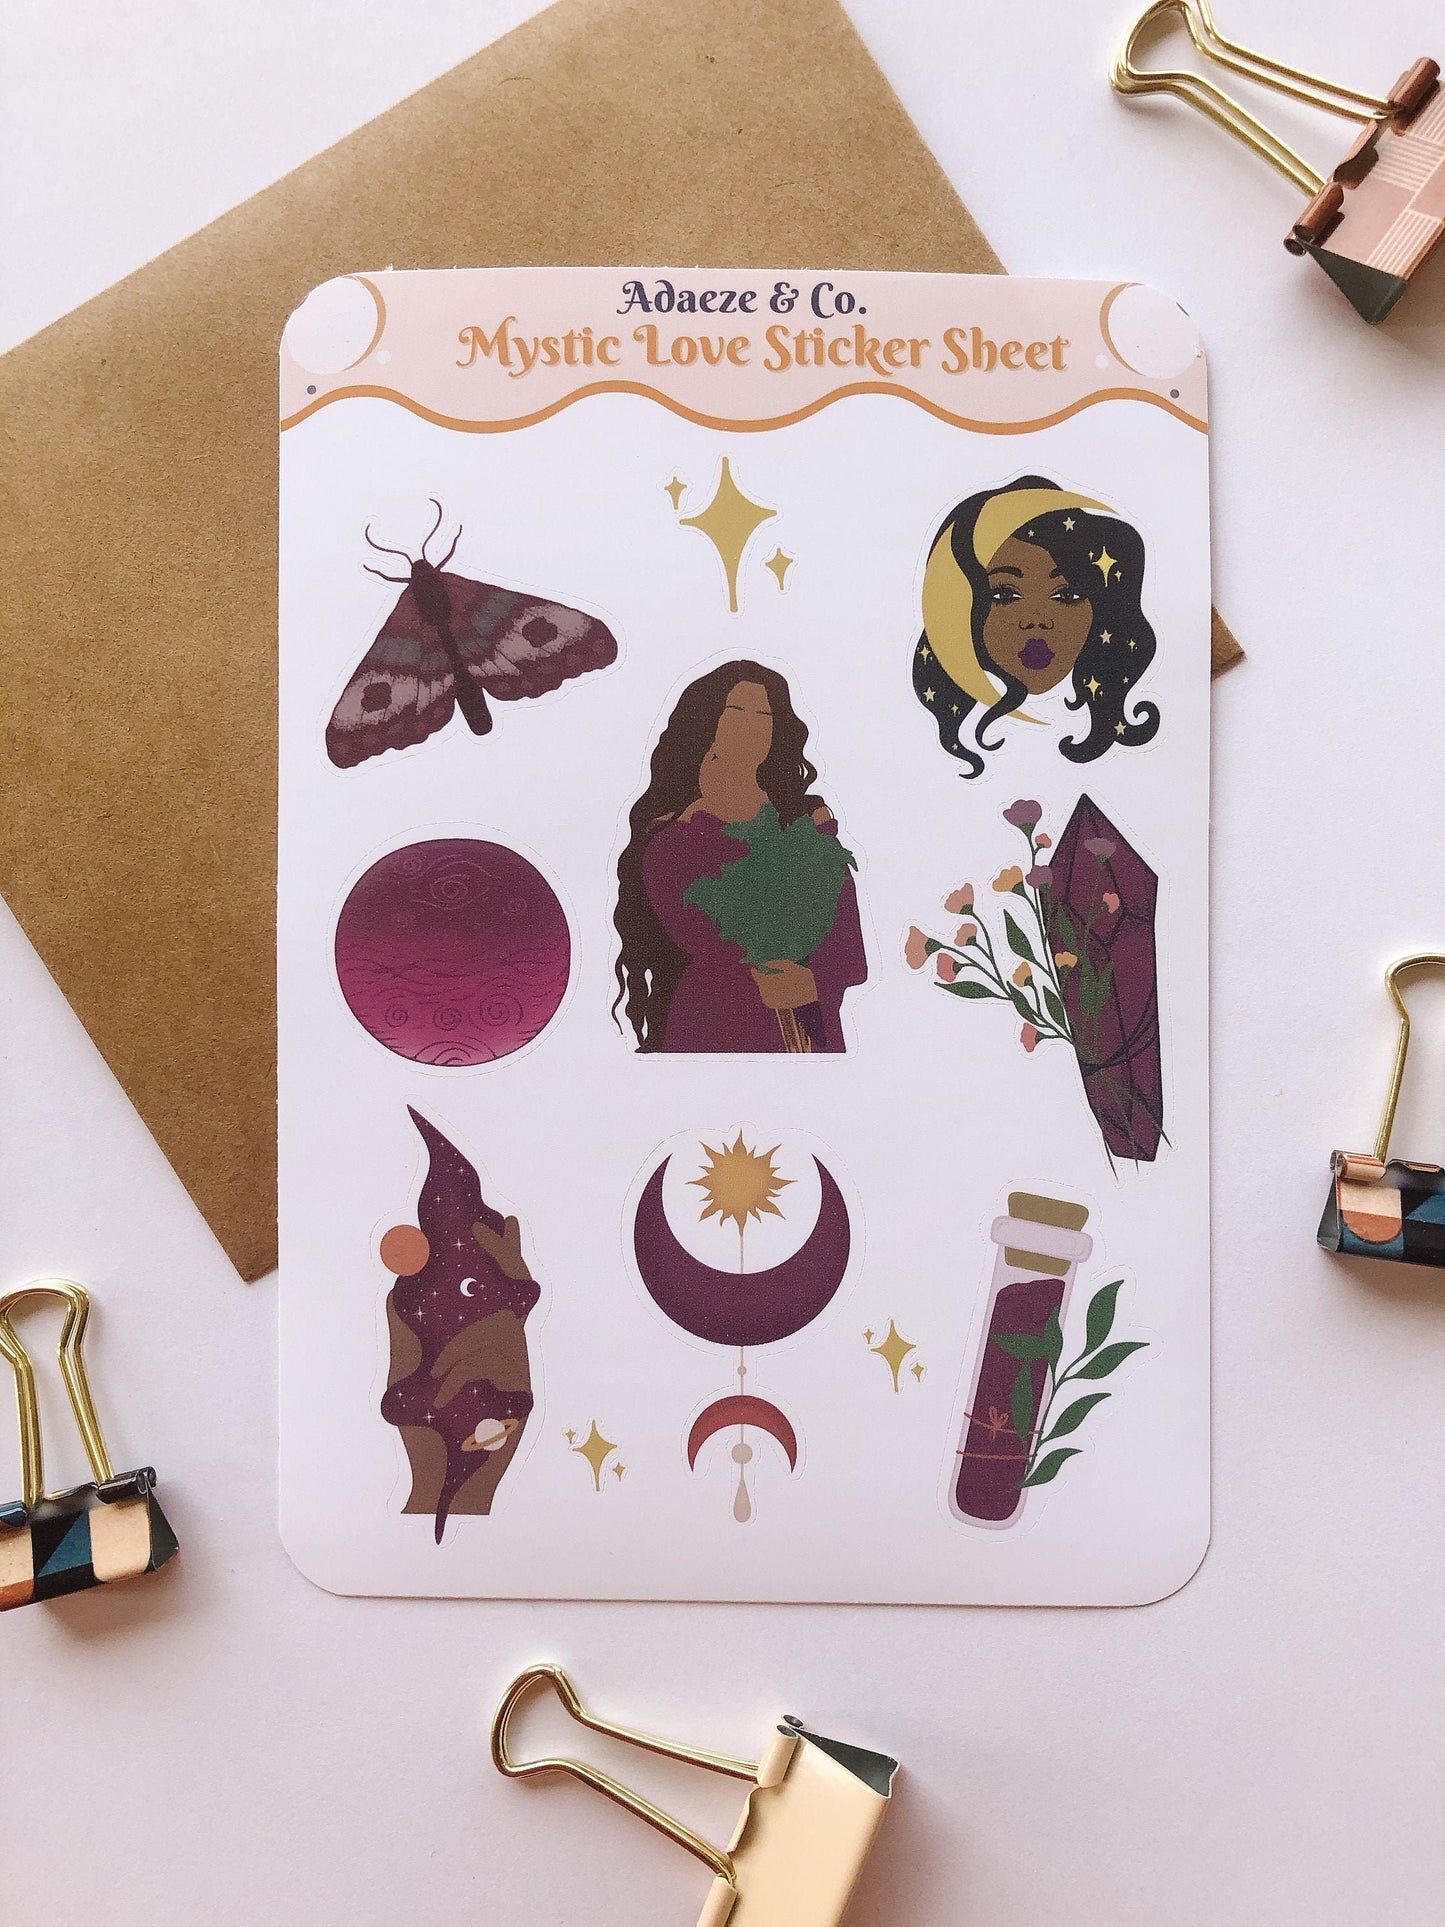 Mystic Arts Sticker Sheet